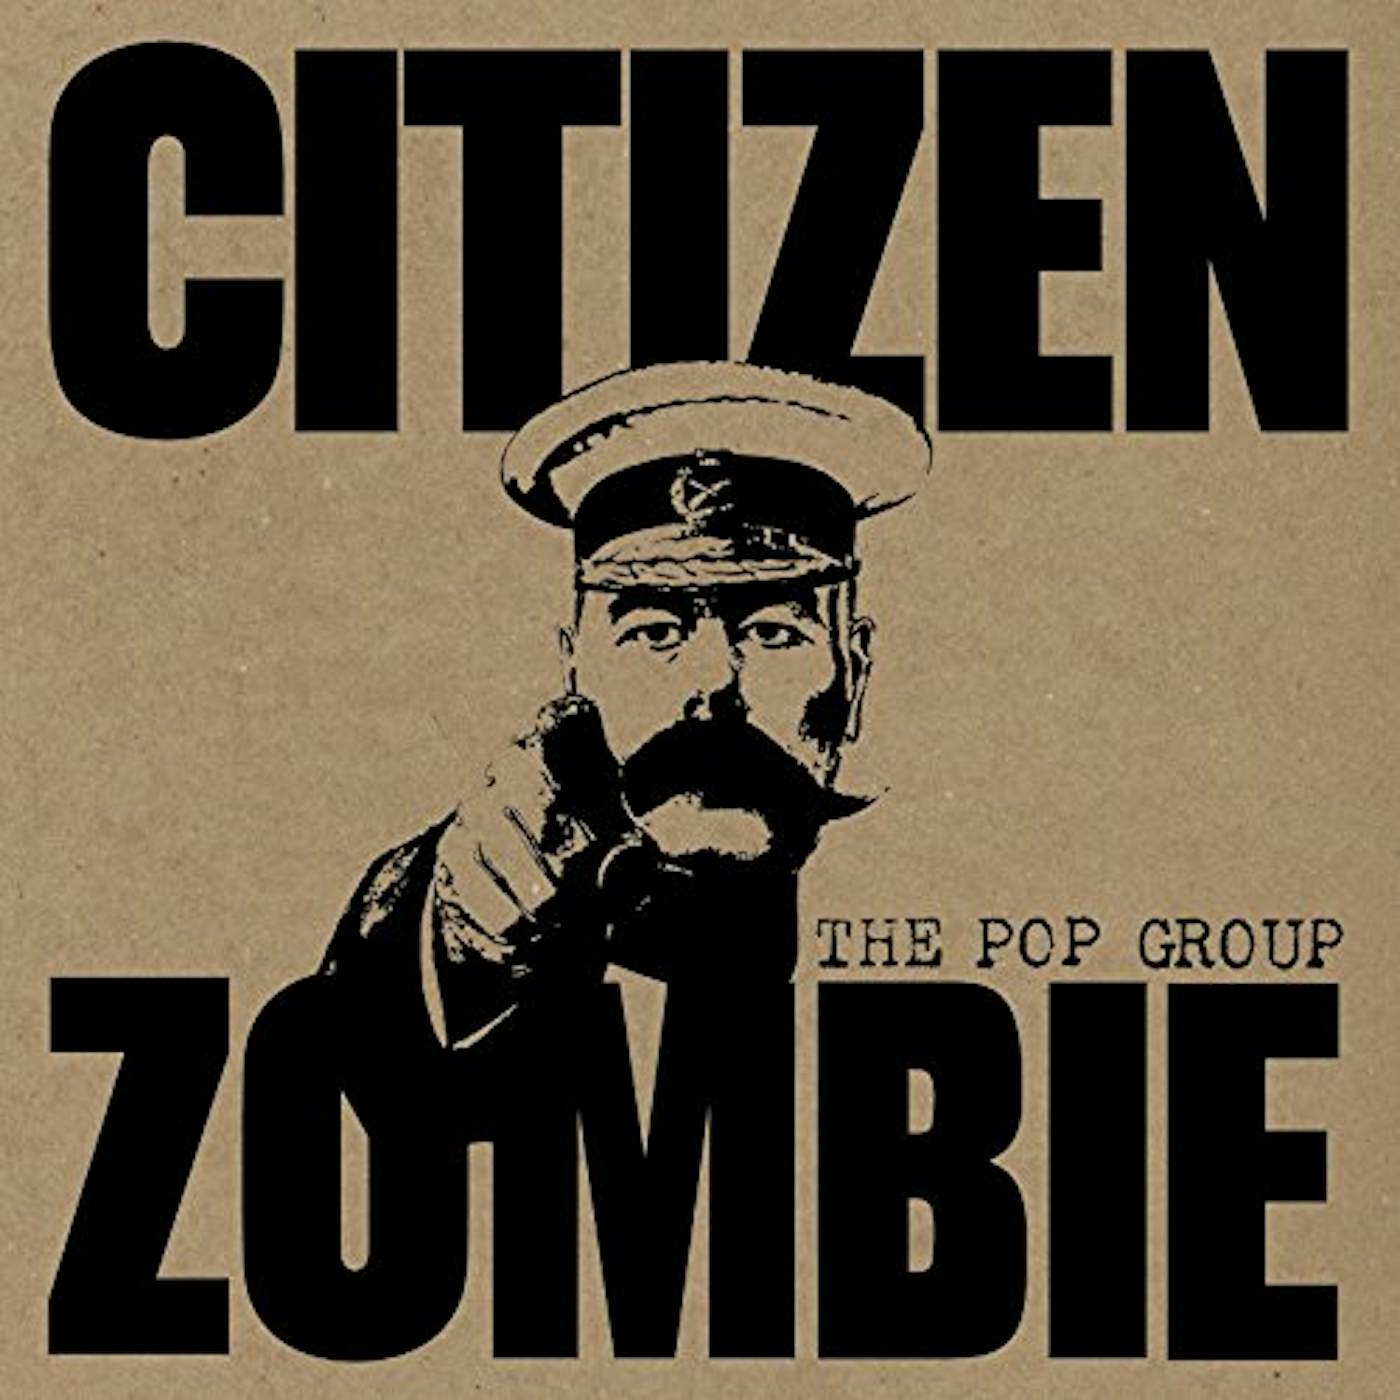 The Pop Group CITIZEN ZOMBIE CD